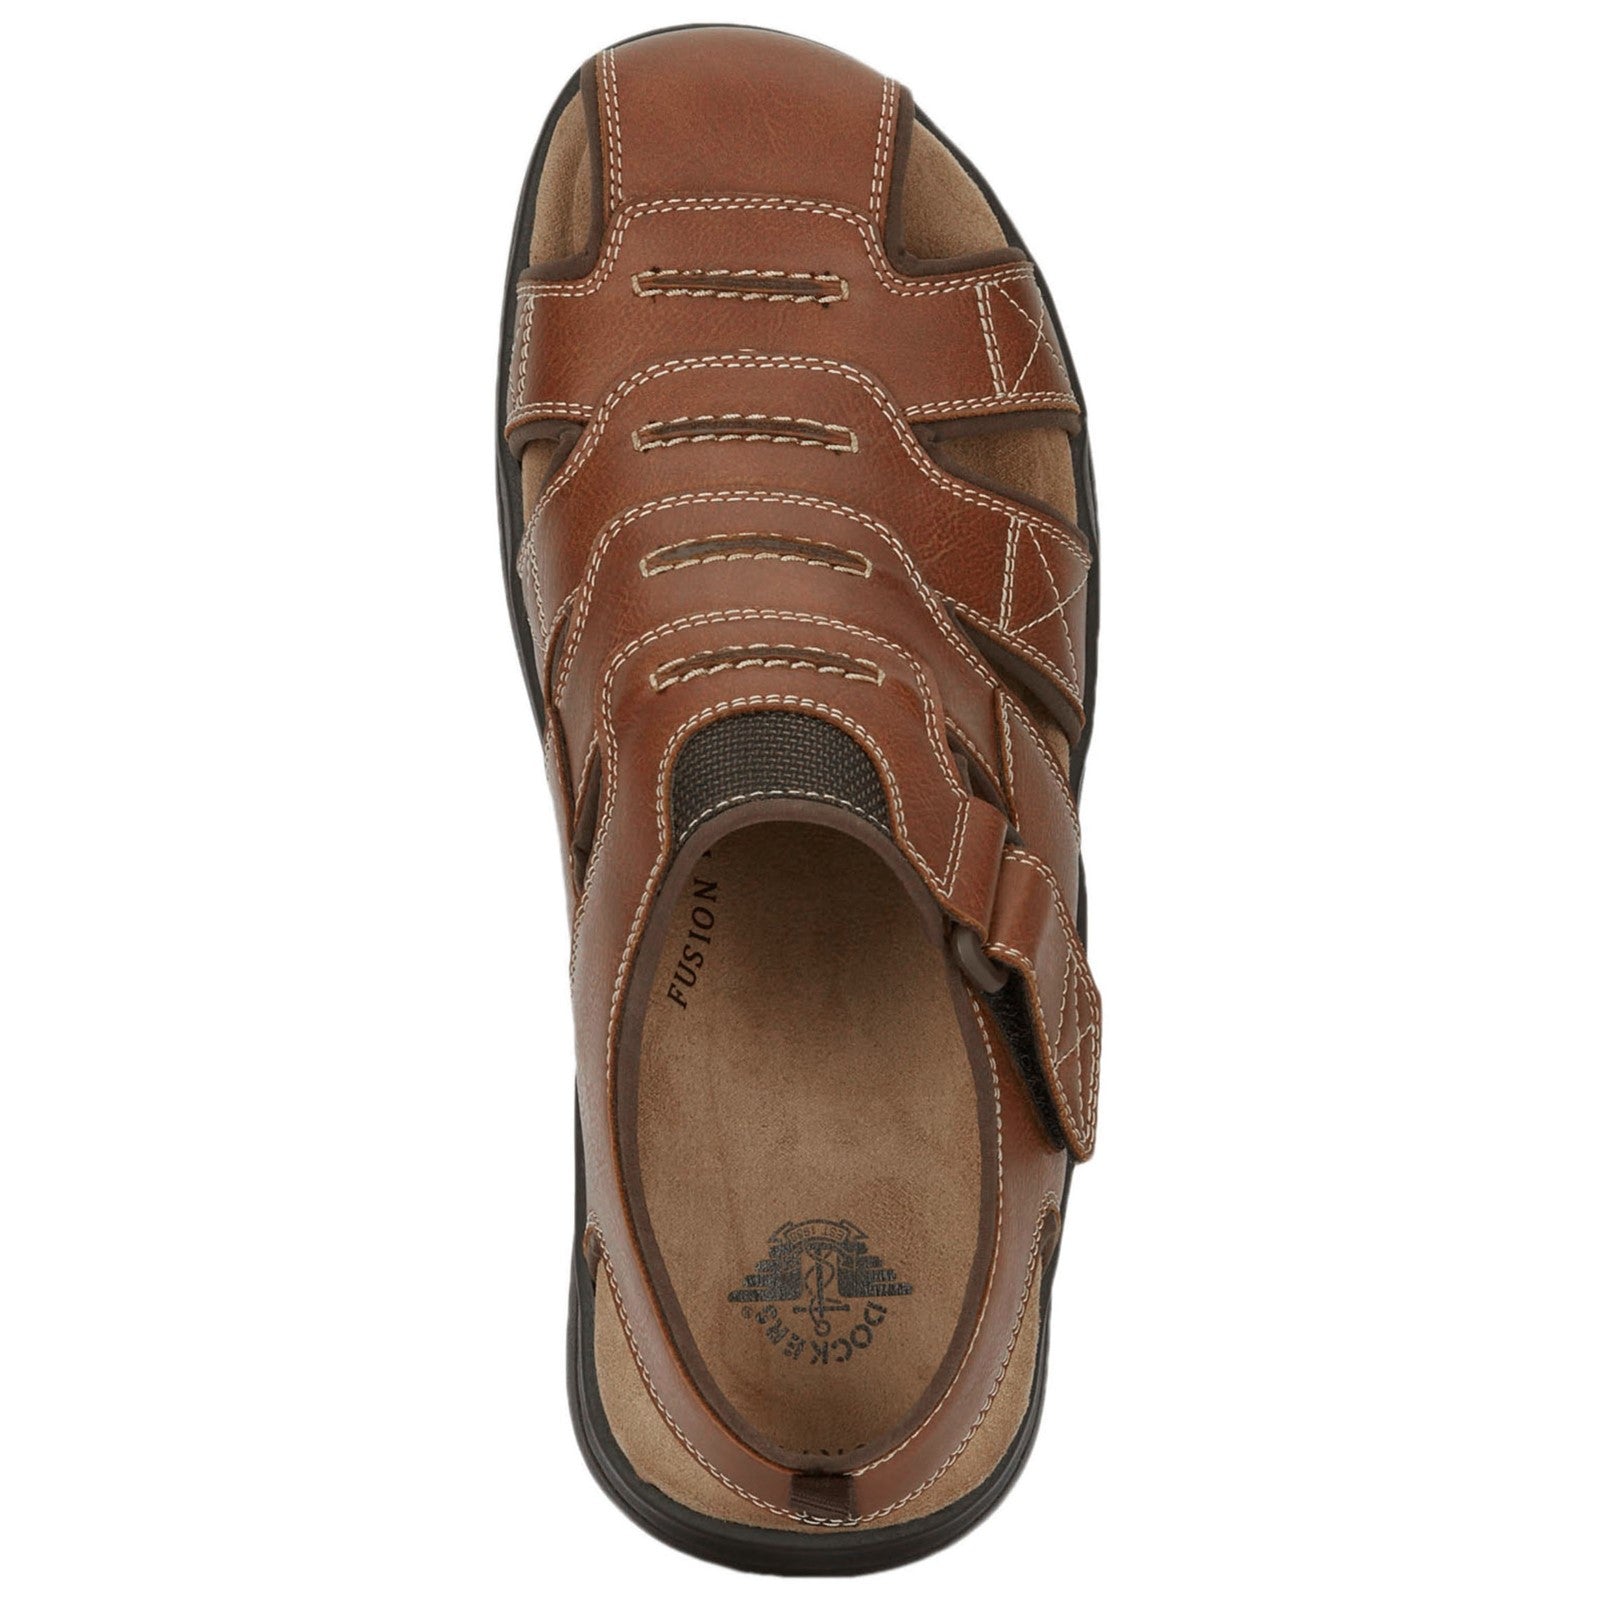 Docker's Men's Rover Black/Grey Athletic Sport Slip On Sandals New Box -  general for sale - by owner - craigslist